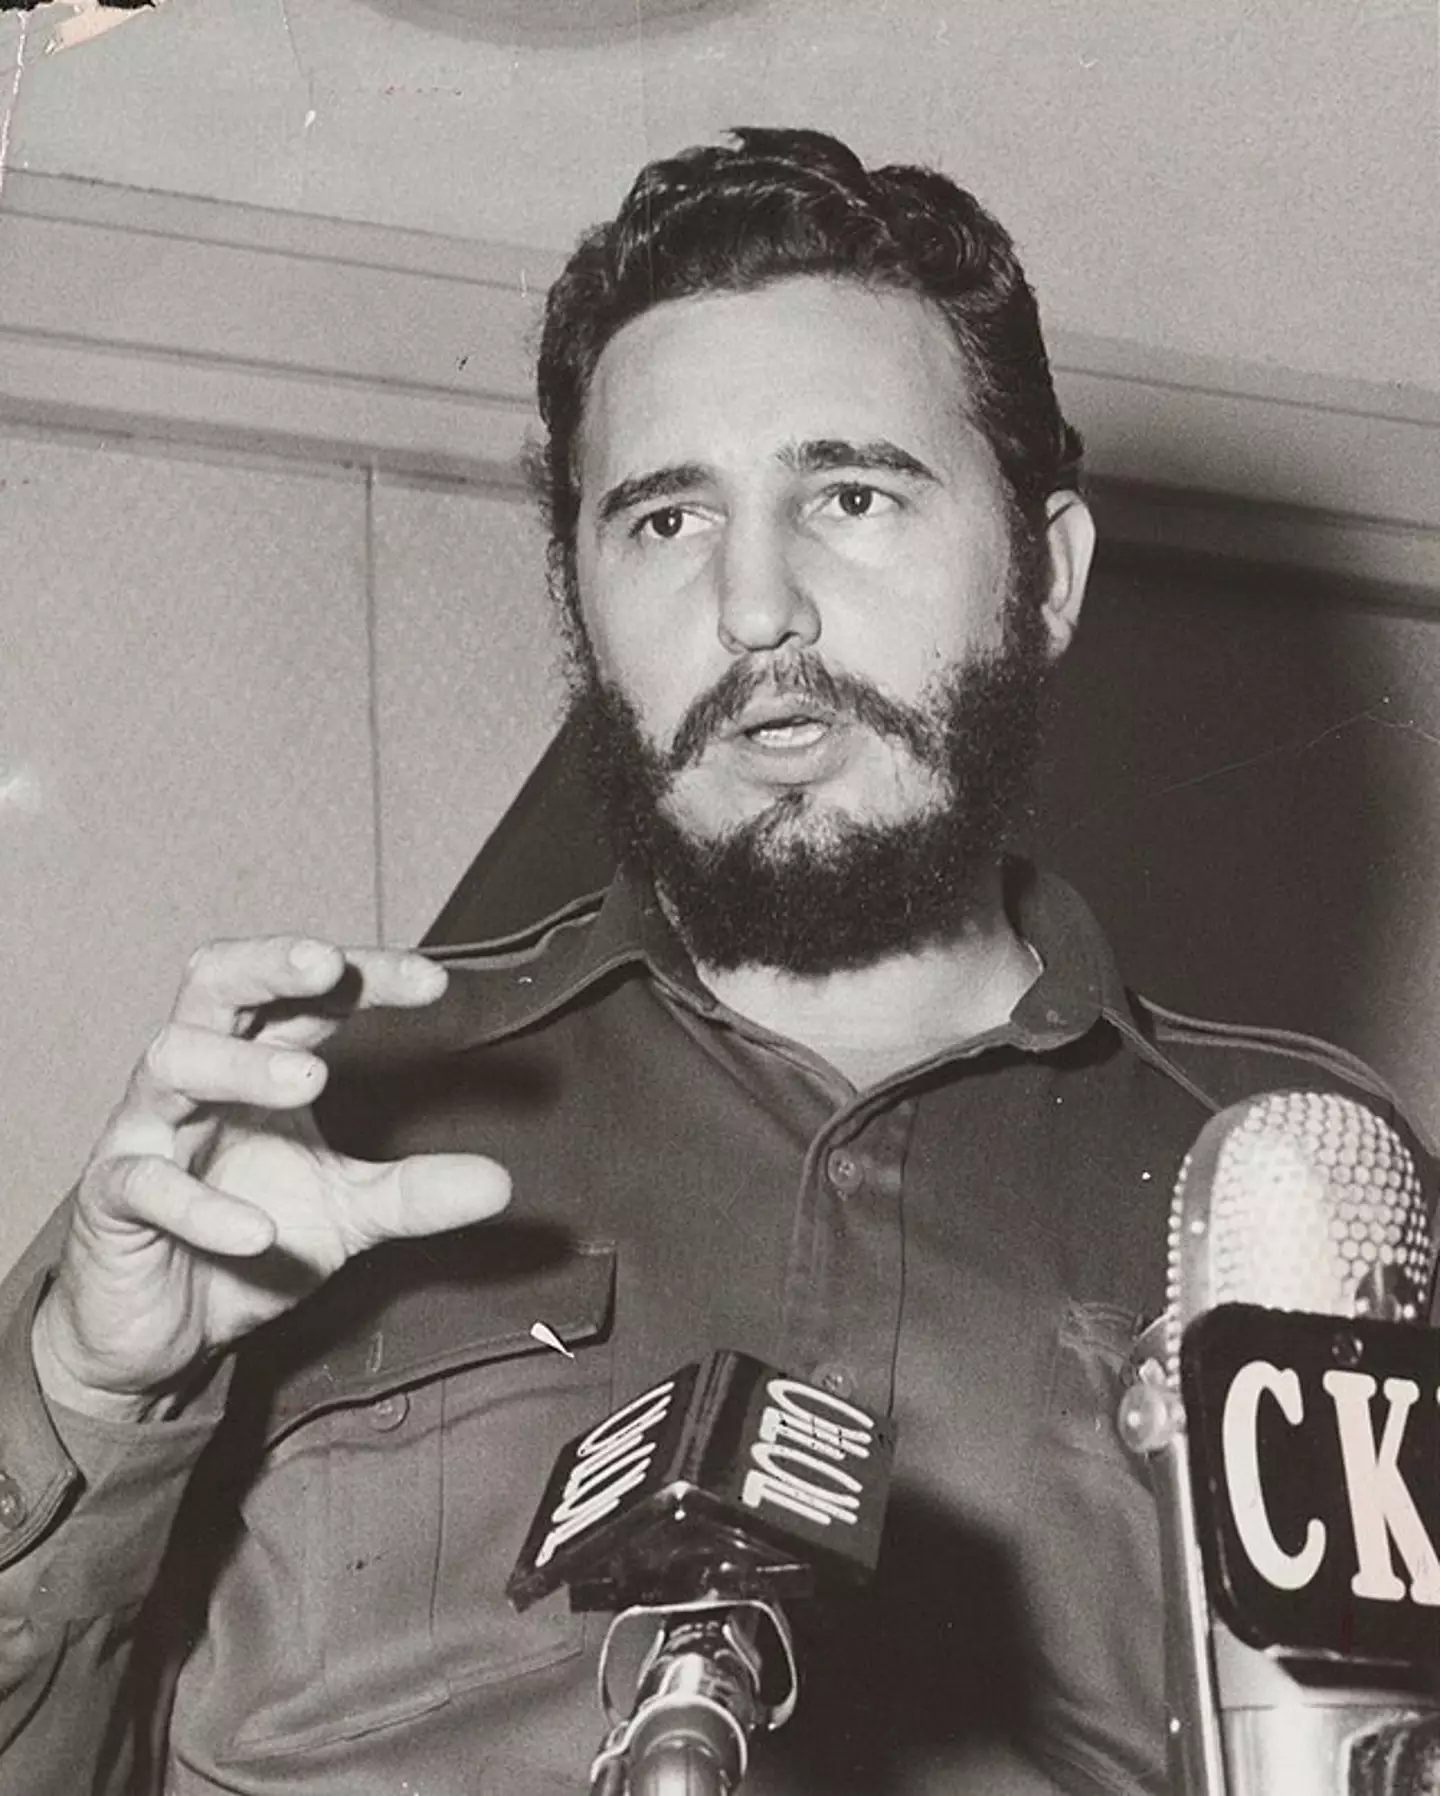 Franco will play the late Cuban leader Fidel Castro.